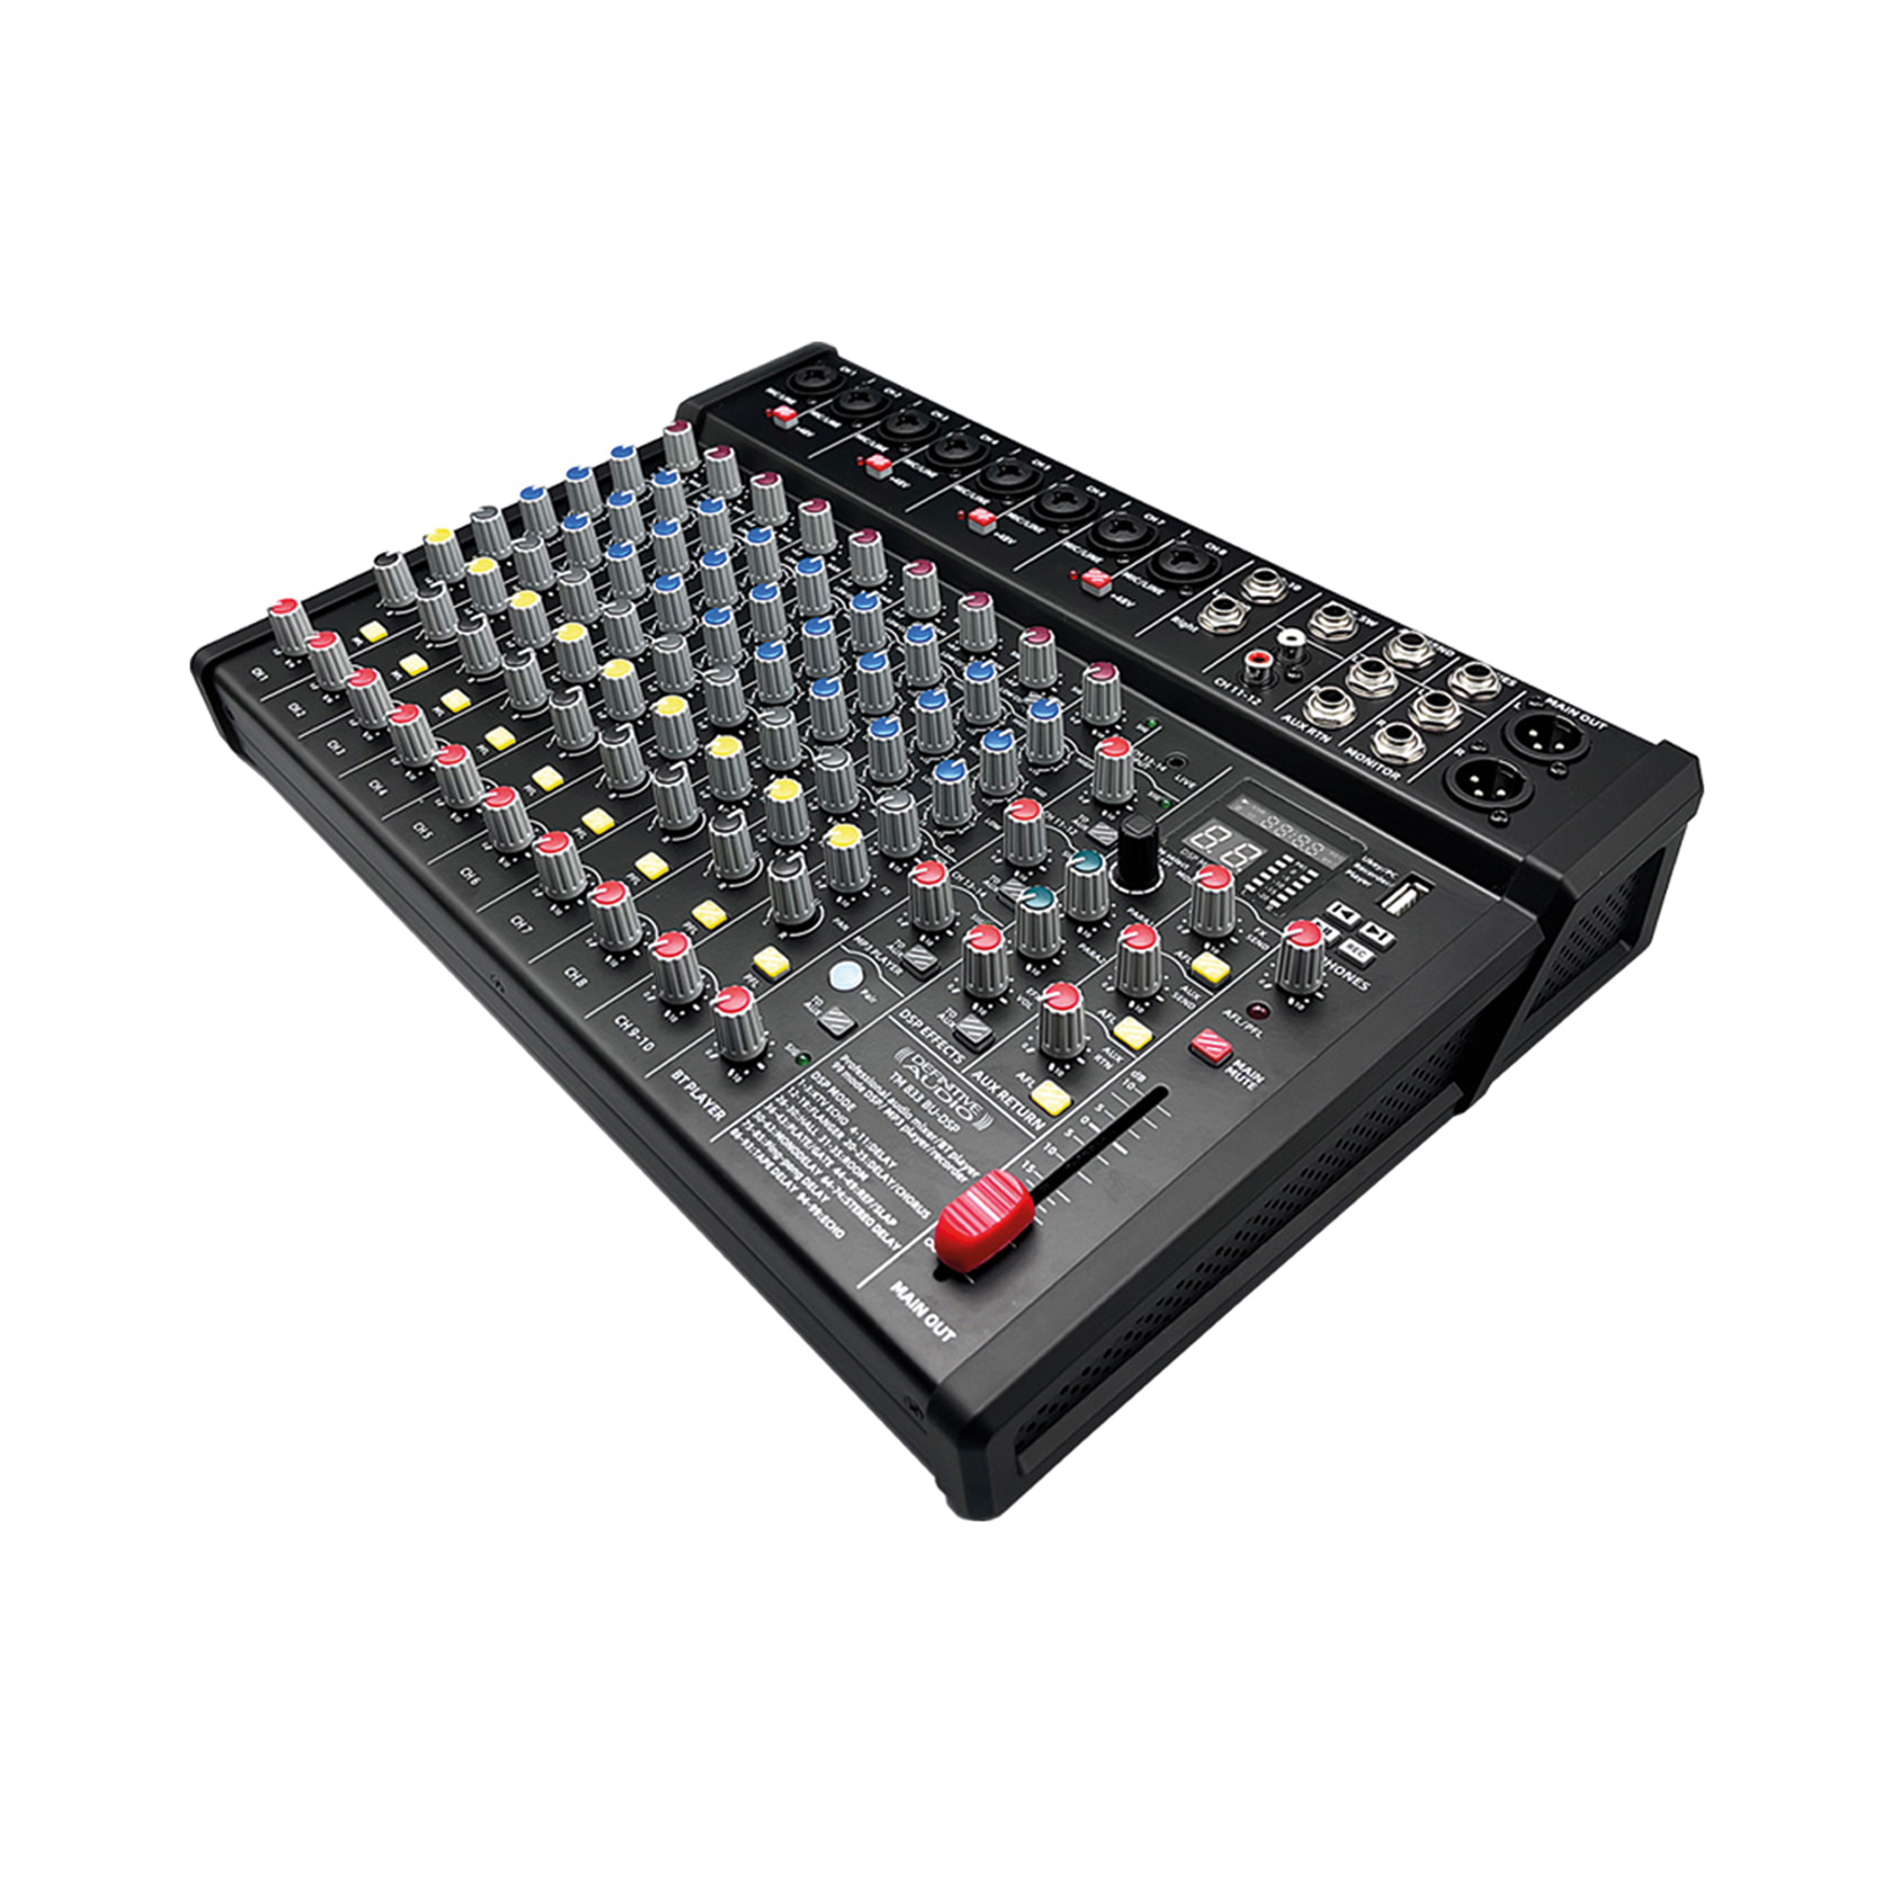 Definitive Audio Tm 833 Bu-dsp - Analog mixing desk - Variation 1